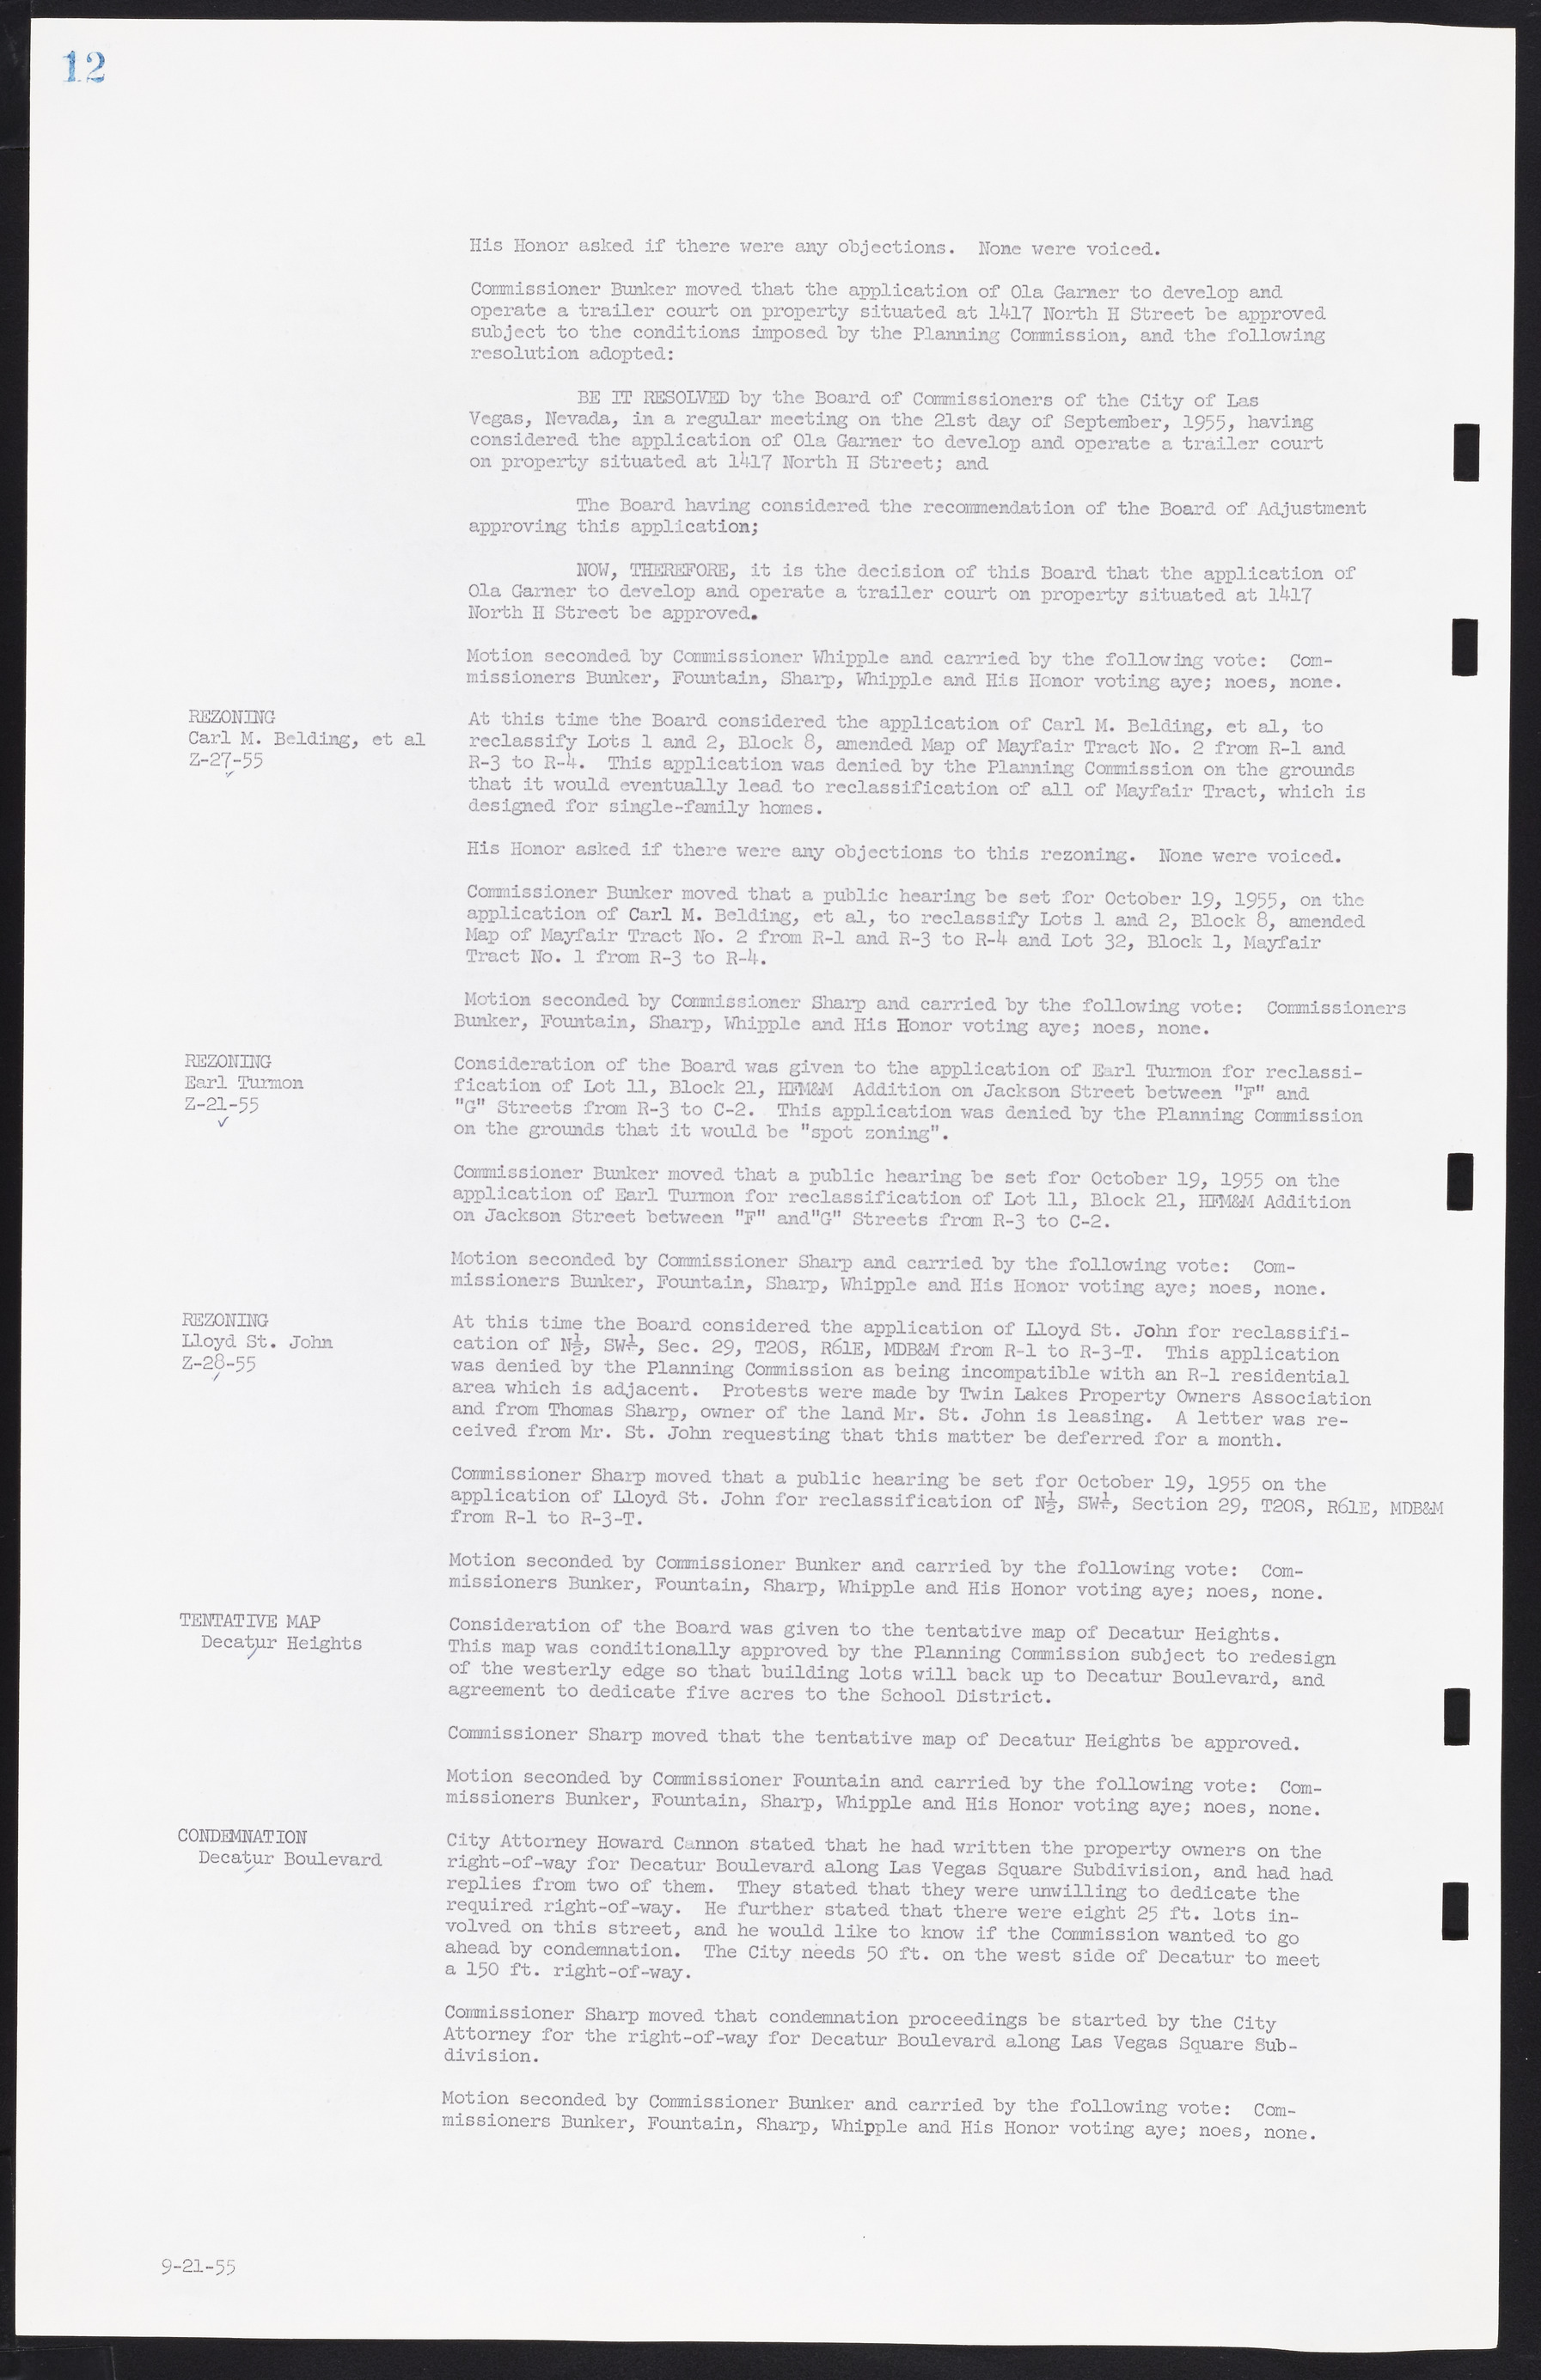 Las Vegas City Commission Minutes, September 21, 1955 to November 20, 1957, lvc000010-18